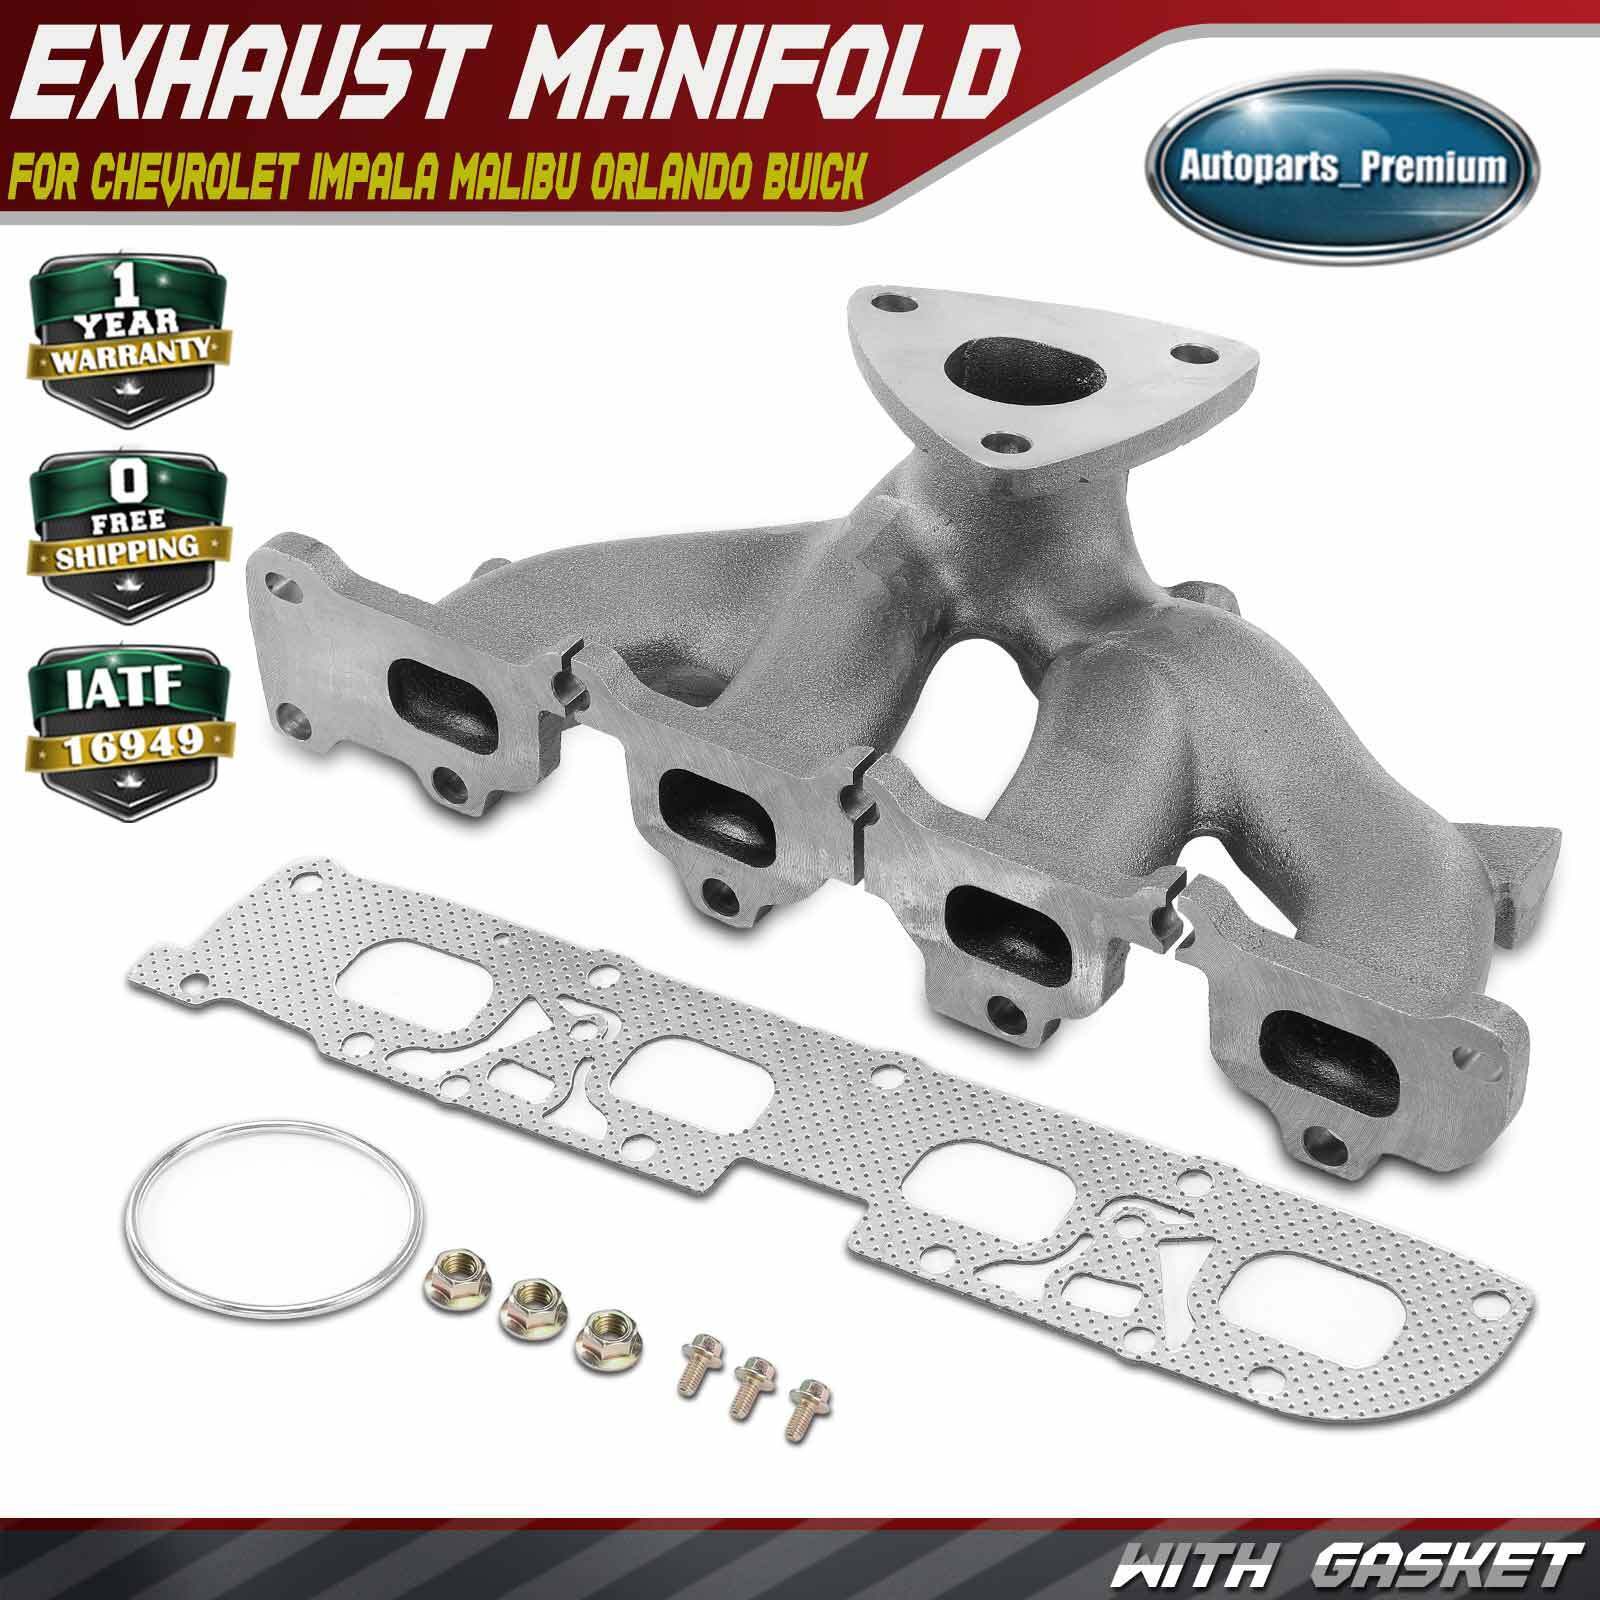 Exhaust Manifold w/ Gasket Kit for Chevrolet Impala Malibu Orlando Buick Saturn